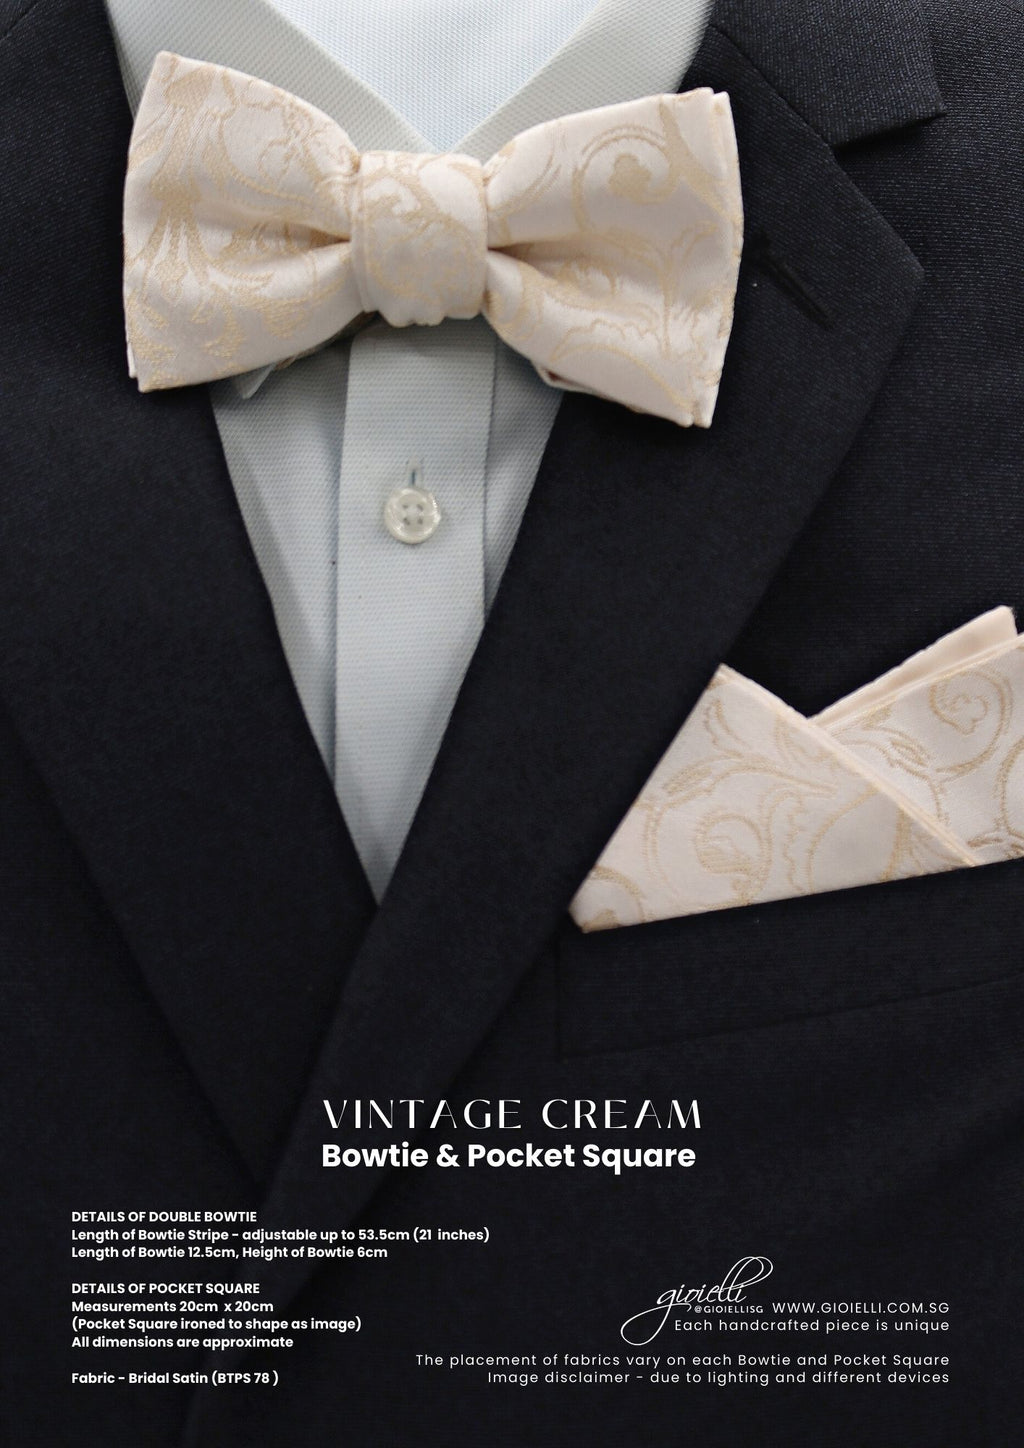 Gioielli Wedding Men Accessories - Vintage Cream Bow Tie Pocket Square - gioiellisg - Helan Tan